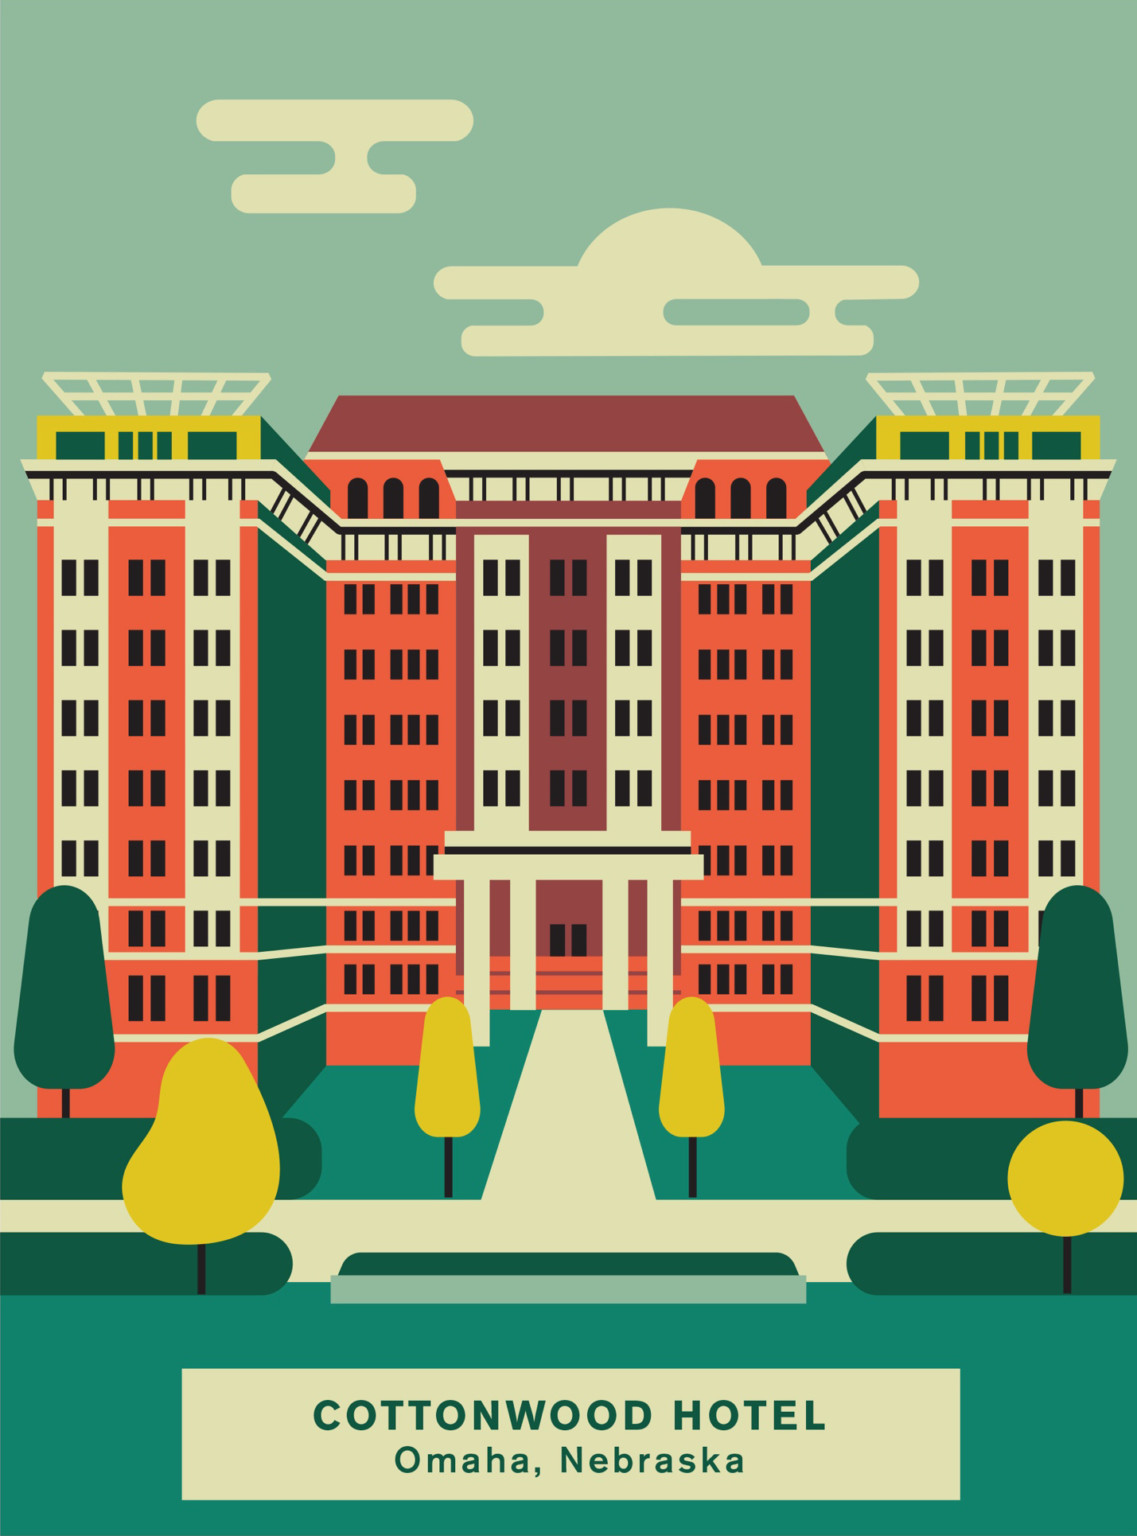 Minimalist graphic poster design of the Kimpton Cottonwood Hotel in Omaha, Nebraska